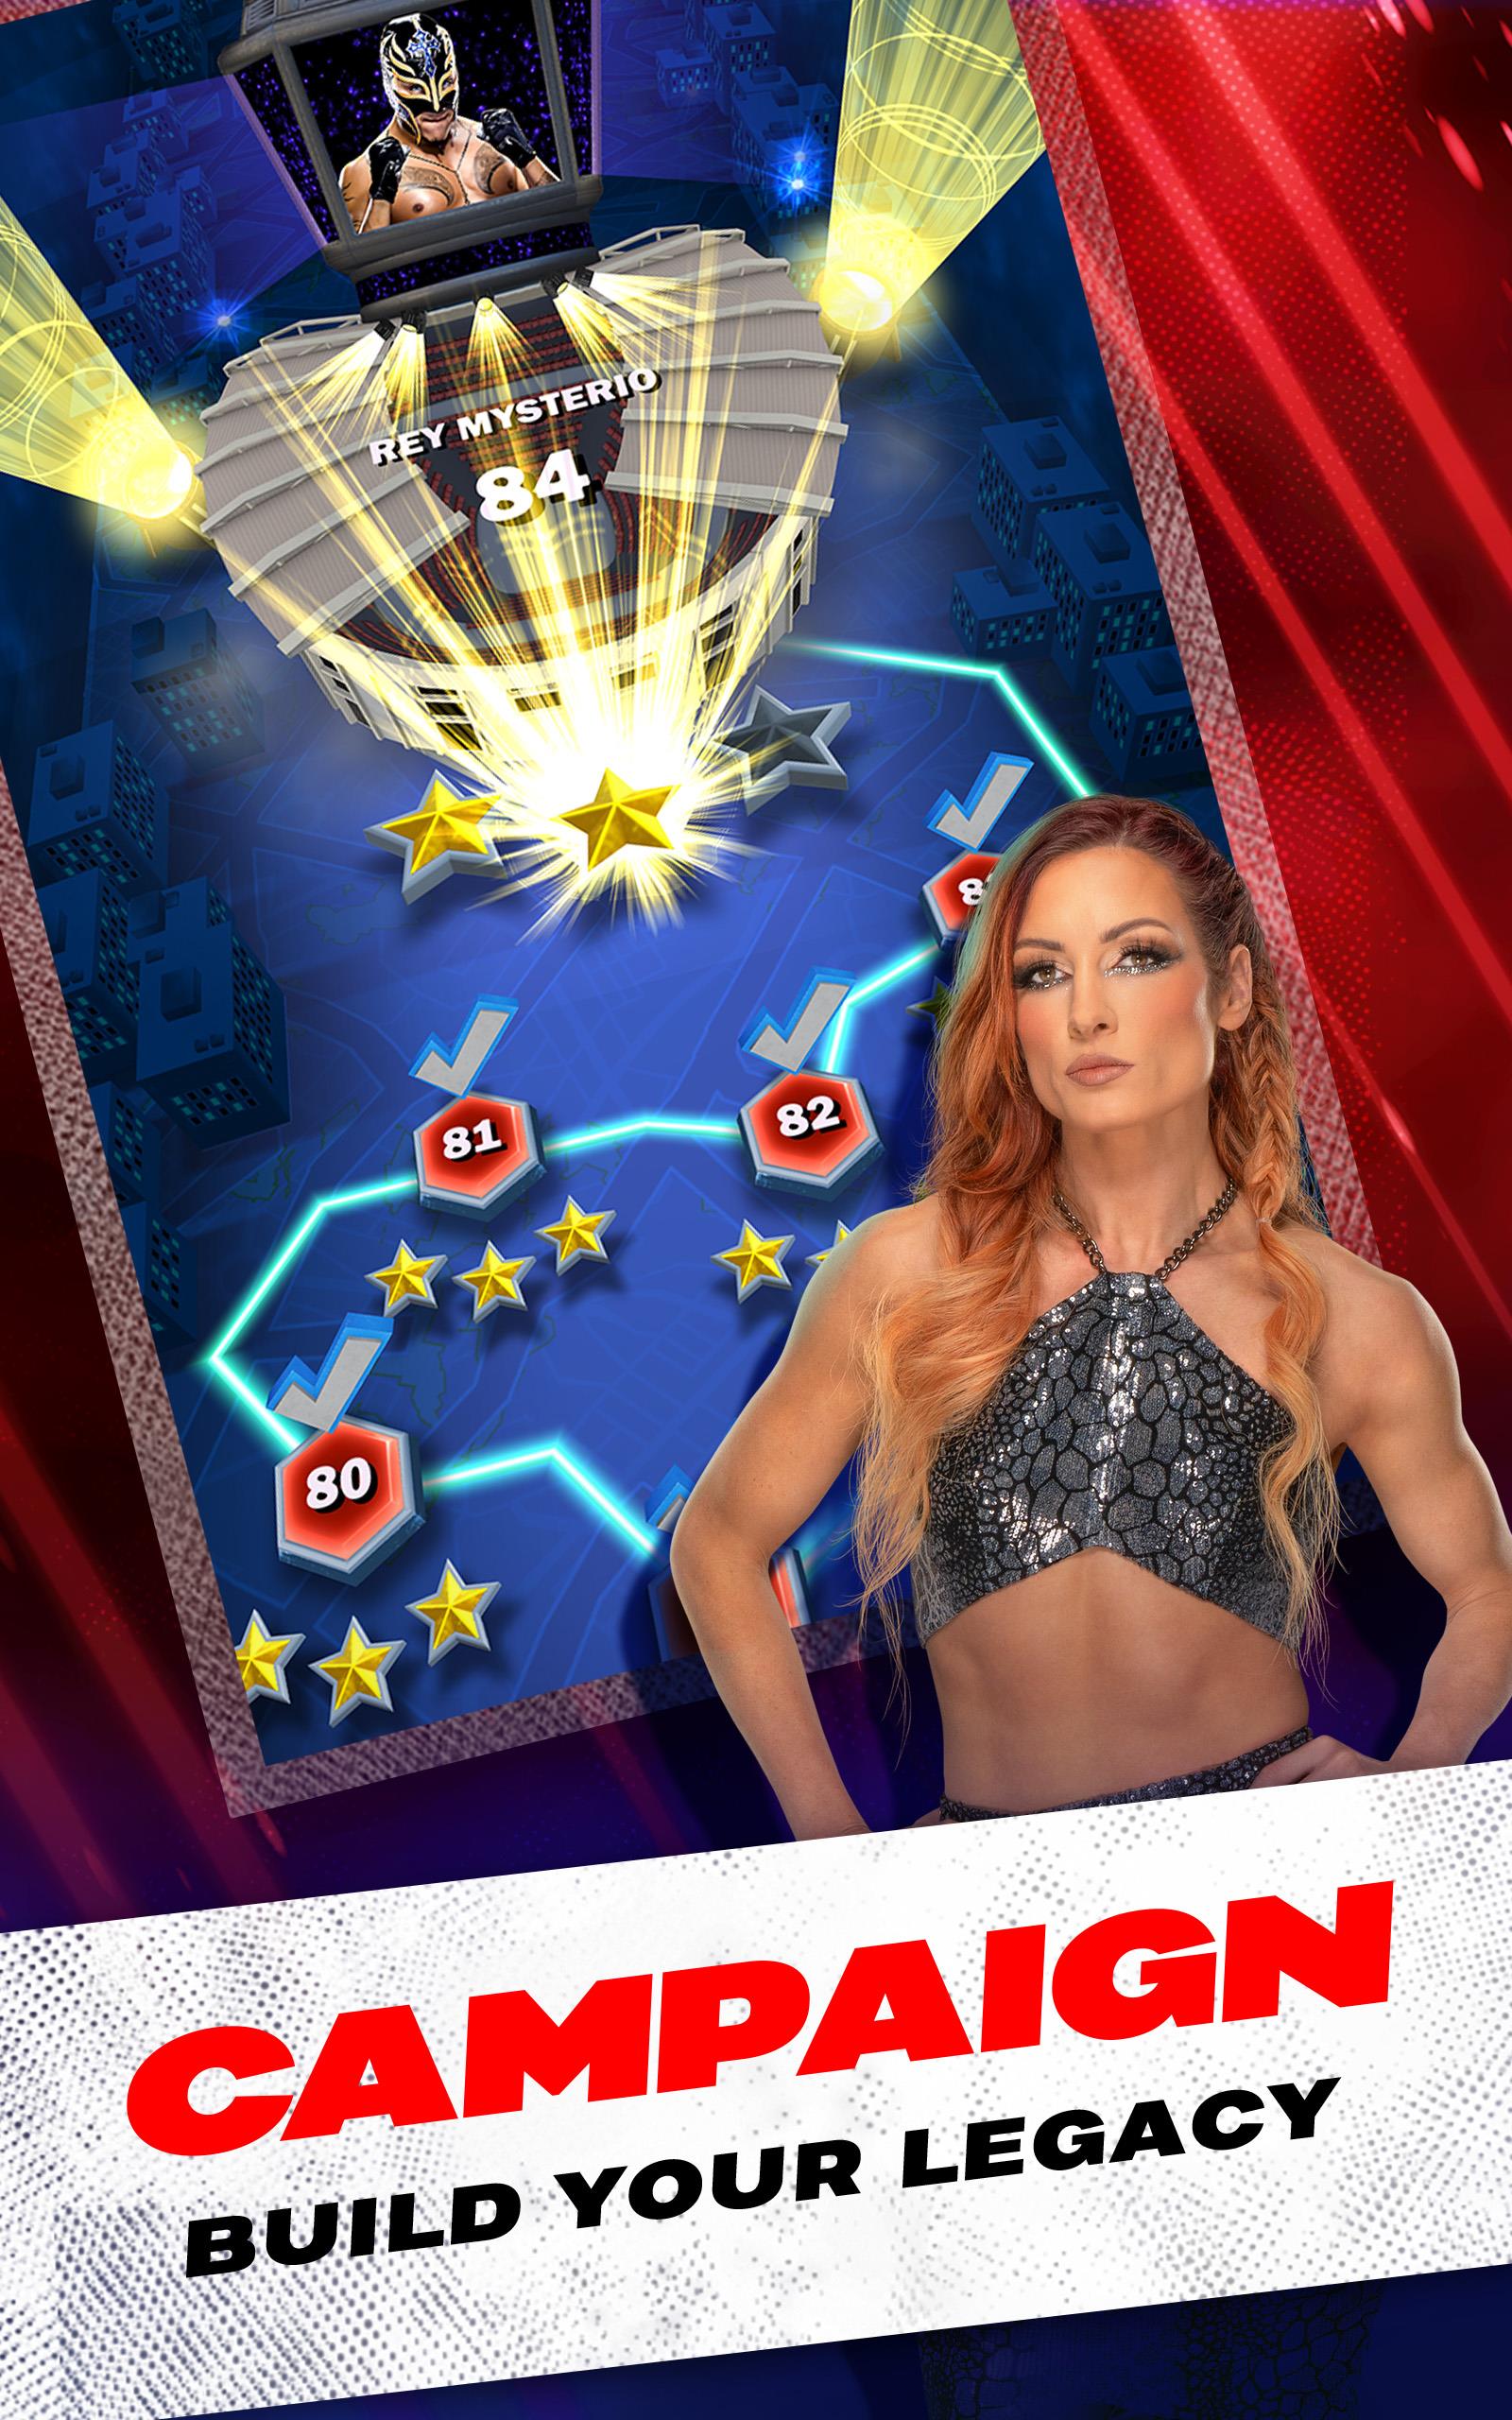 WWE SuperCard - Battle Cards Screenshot 13